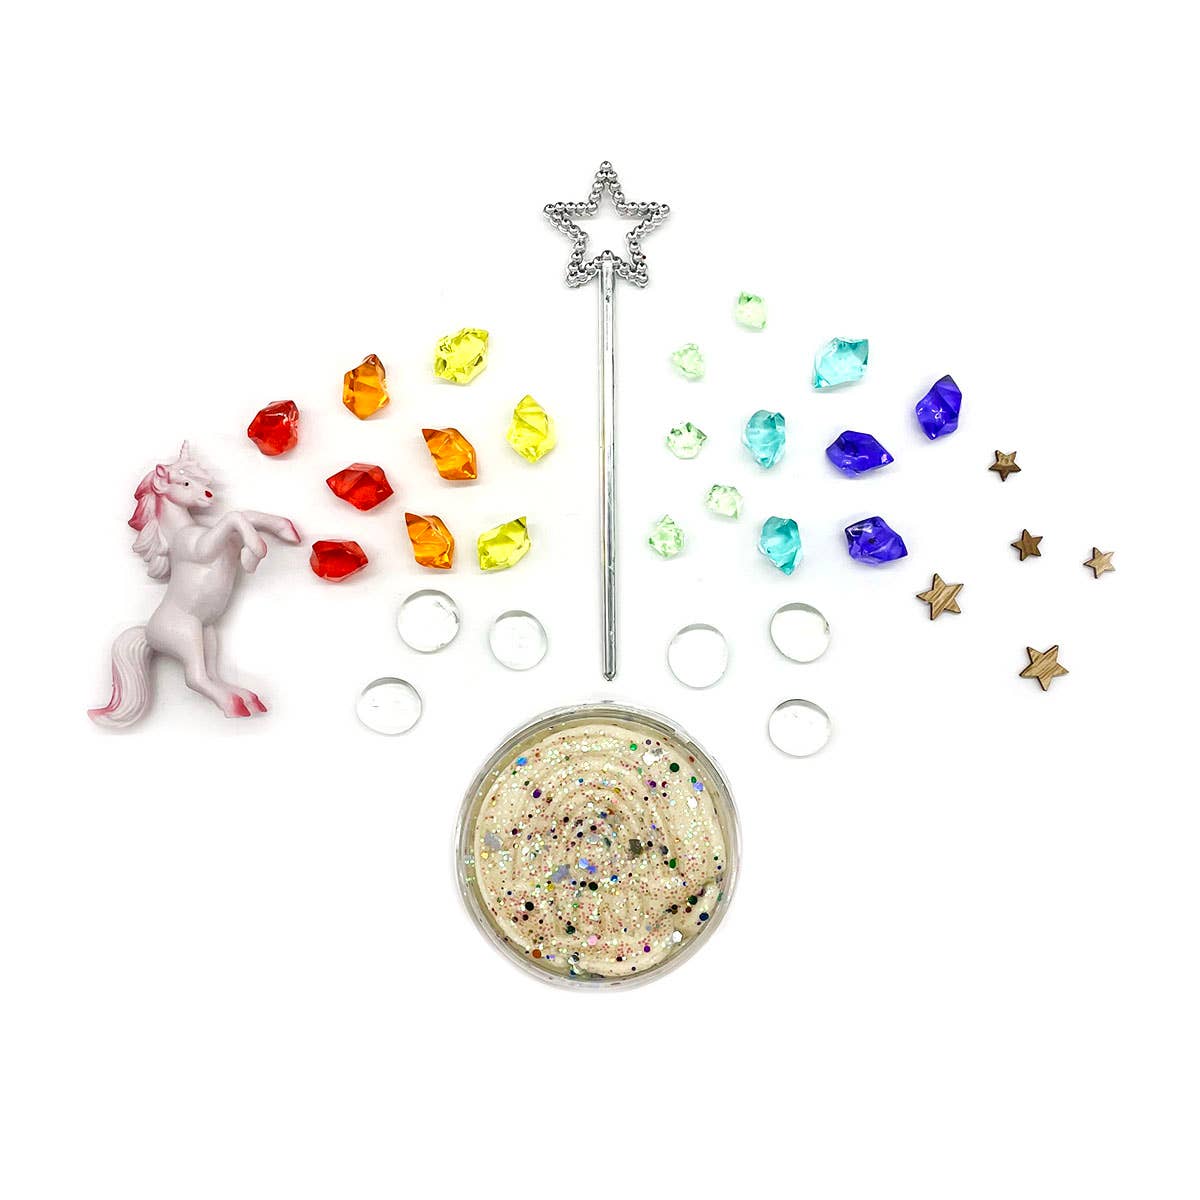 Earth Grown KidDoughs - Unicorn Rainbow (Vanilla Buttercream) Sensory Dough Play Kit